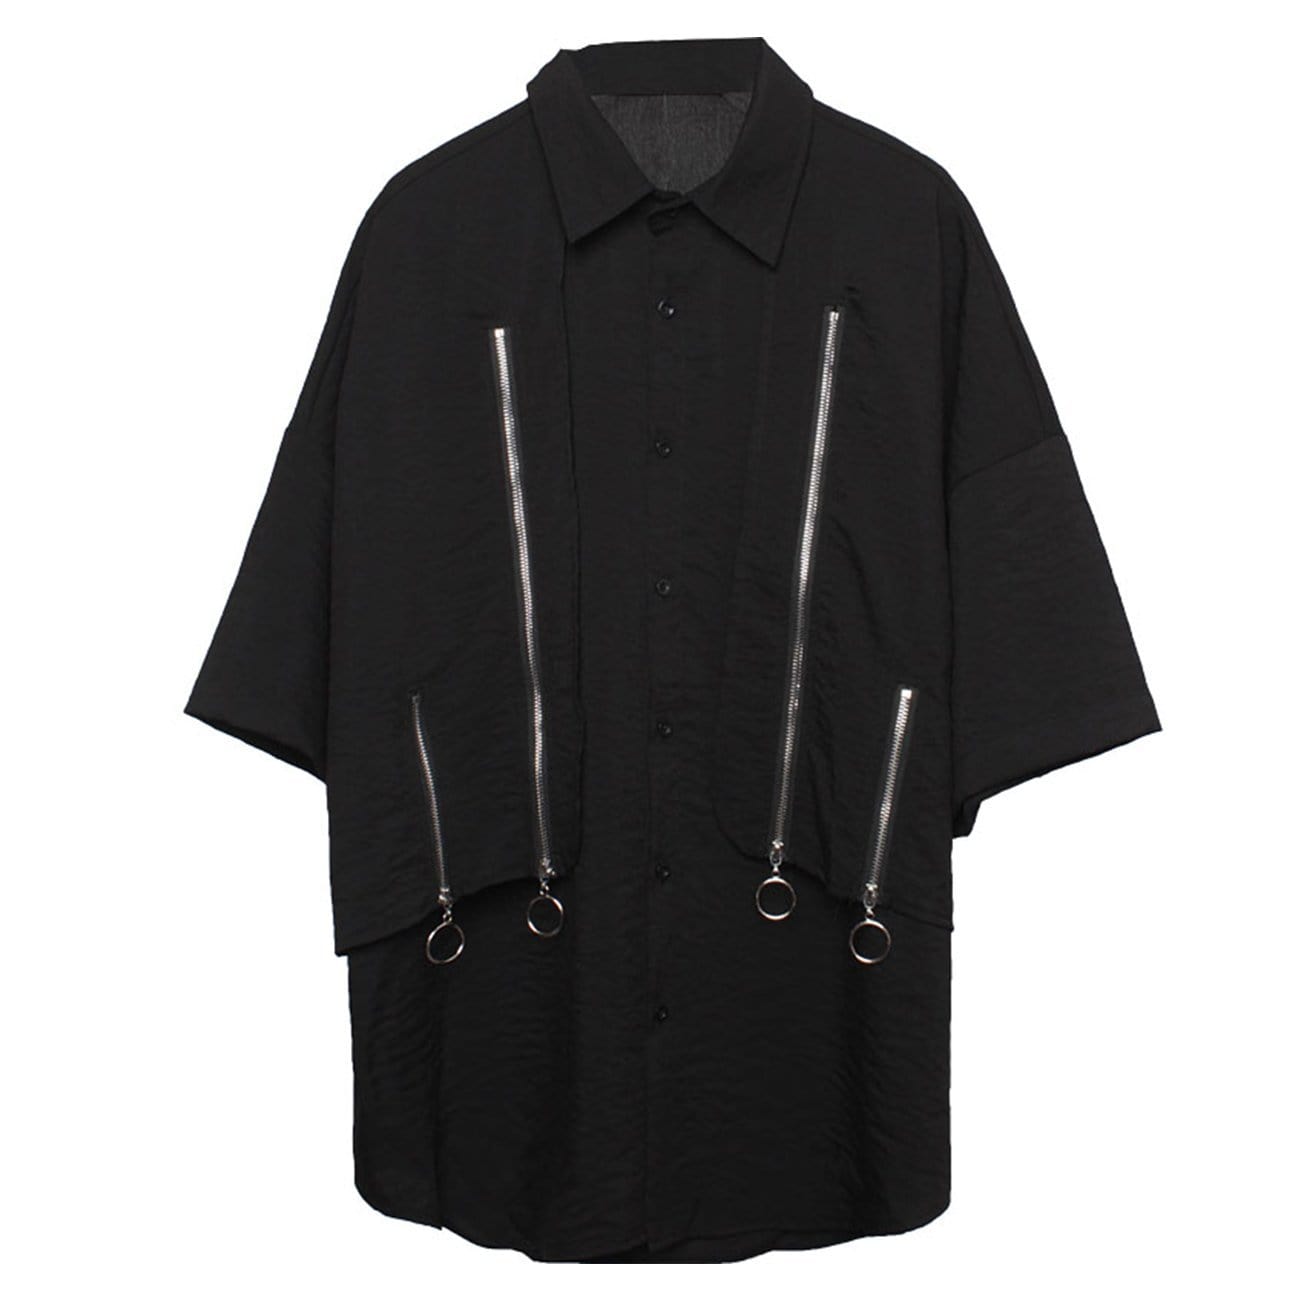 TO Dark Personalized Zipper Patchwork Shirt